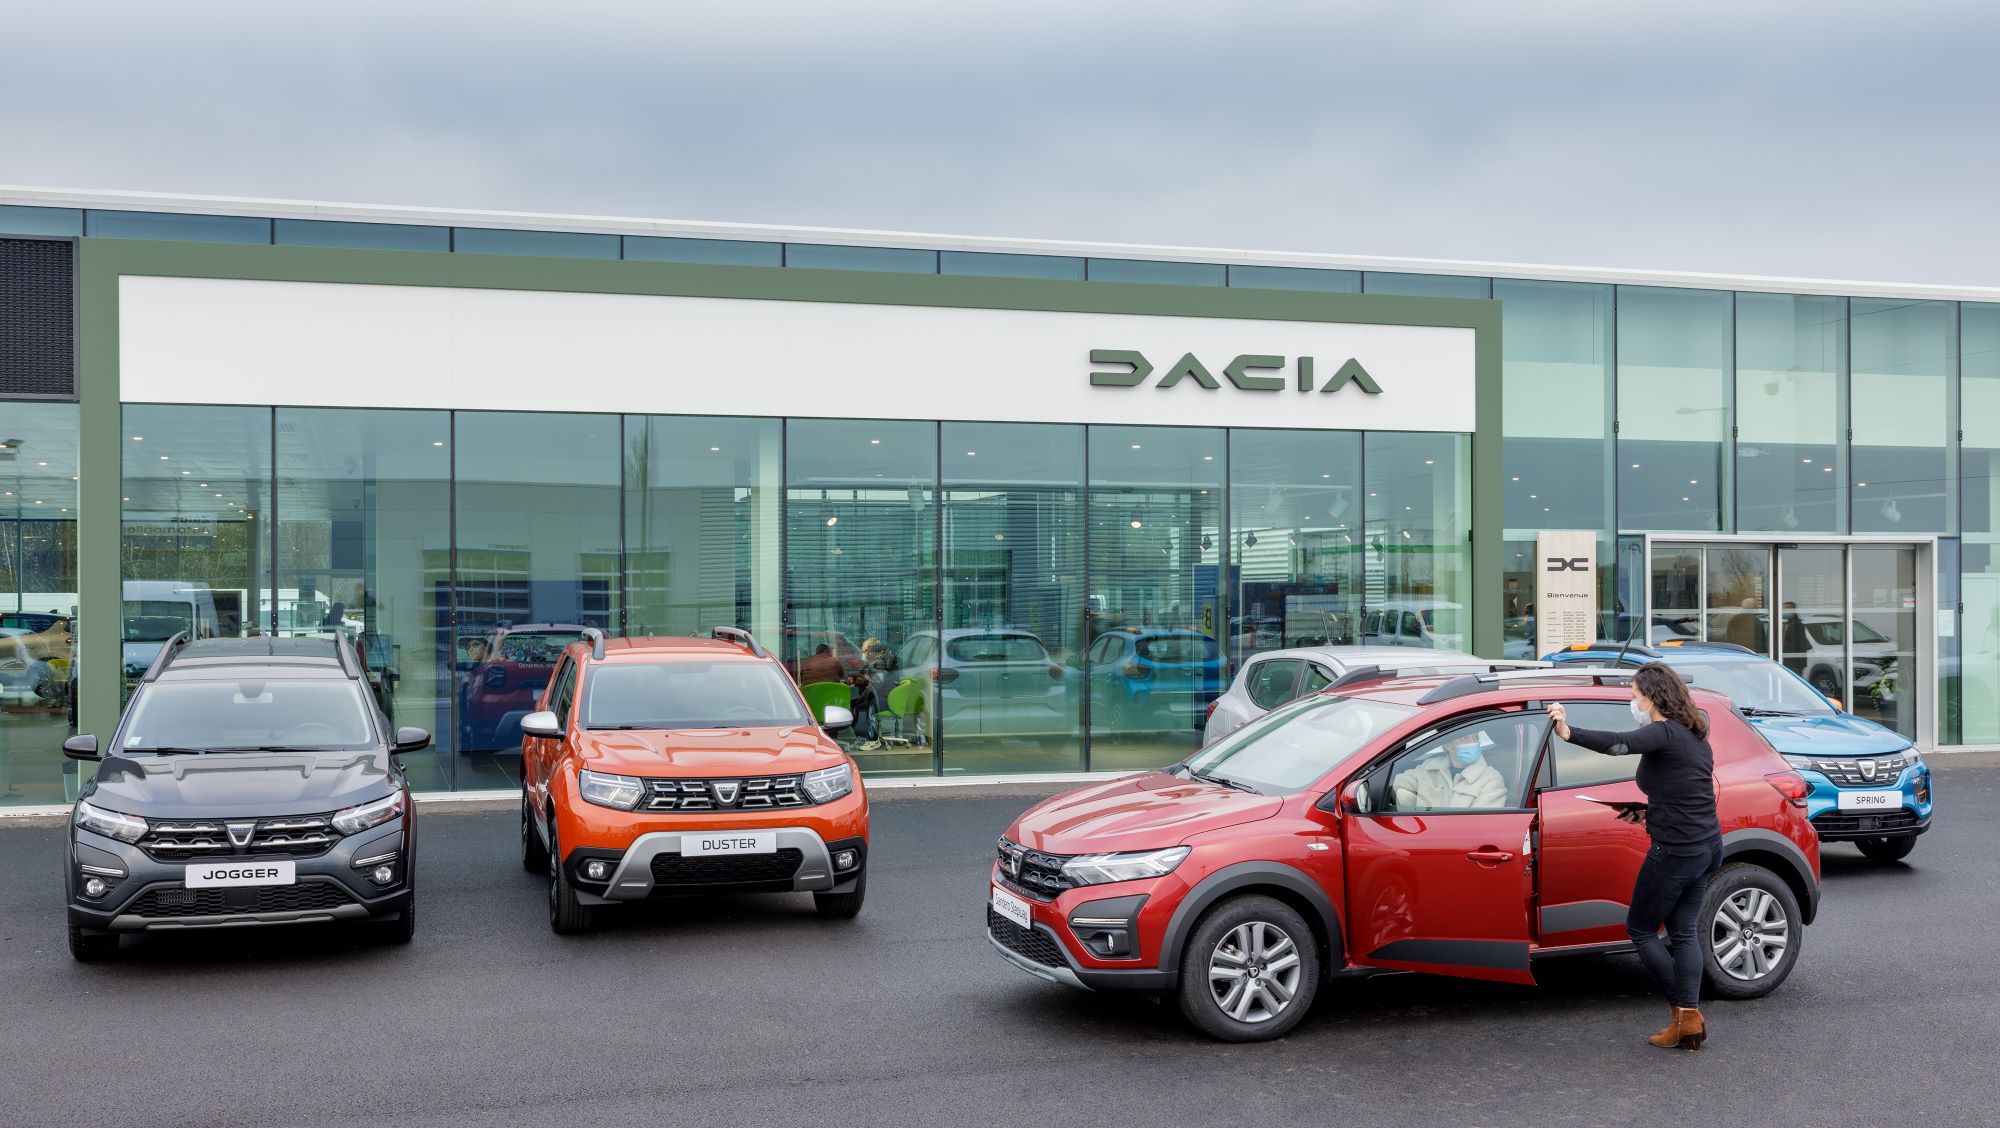 Dacia Sandero new on Autonervión, official Dacia dealership